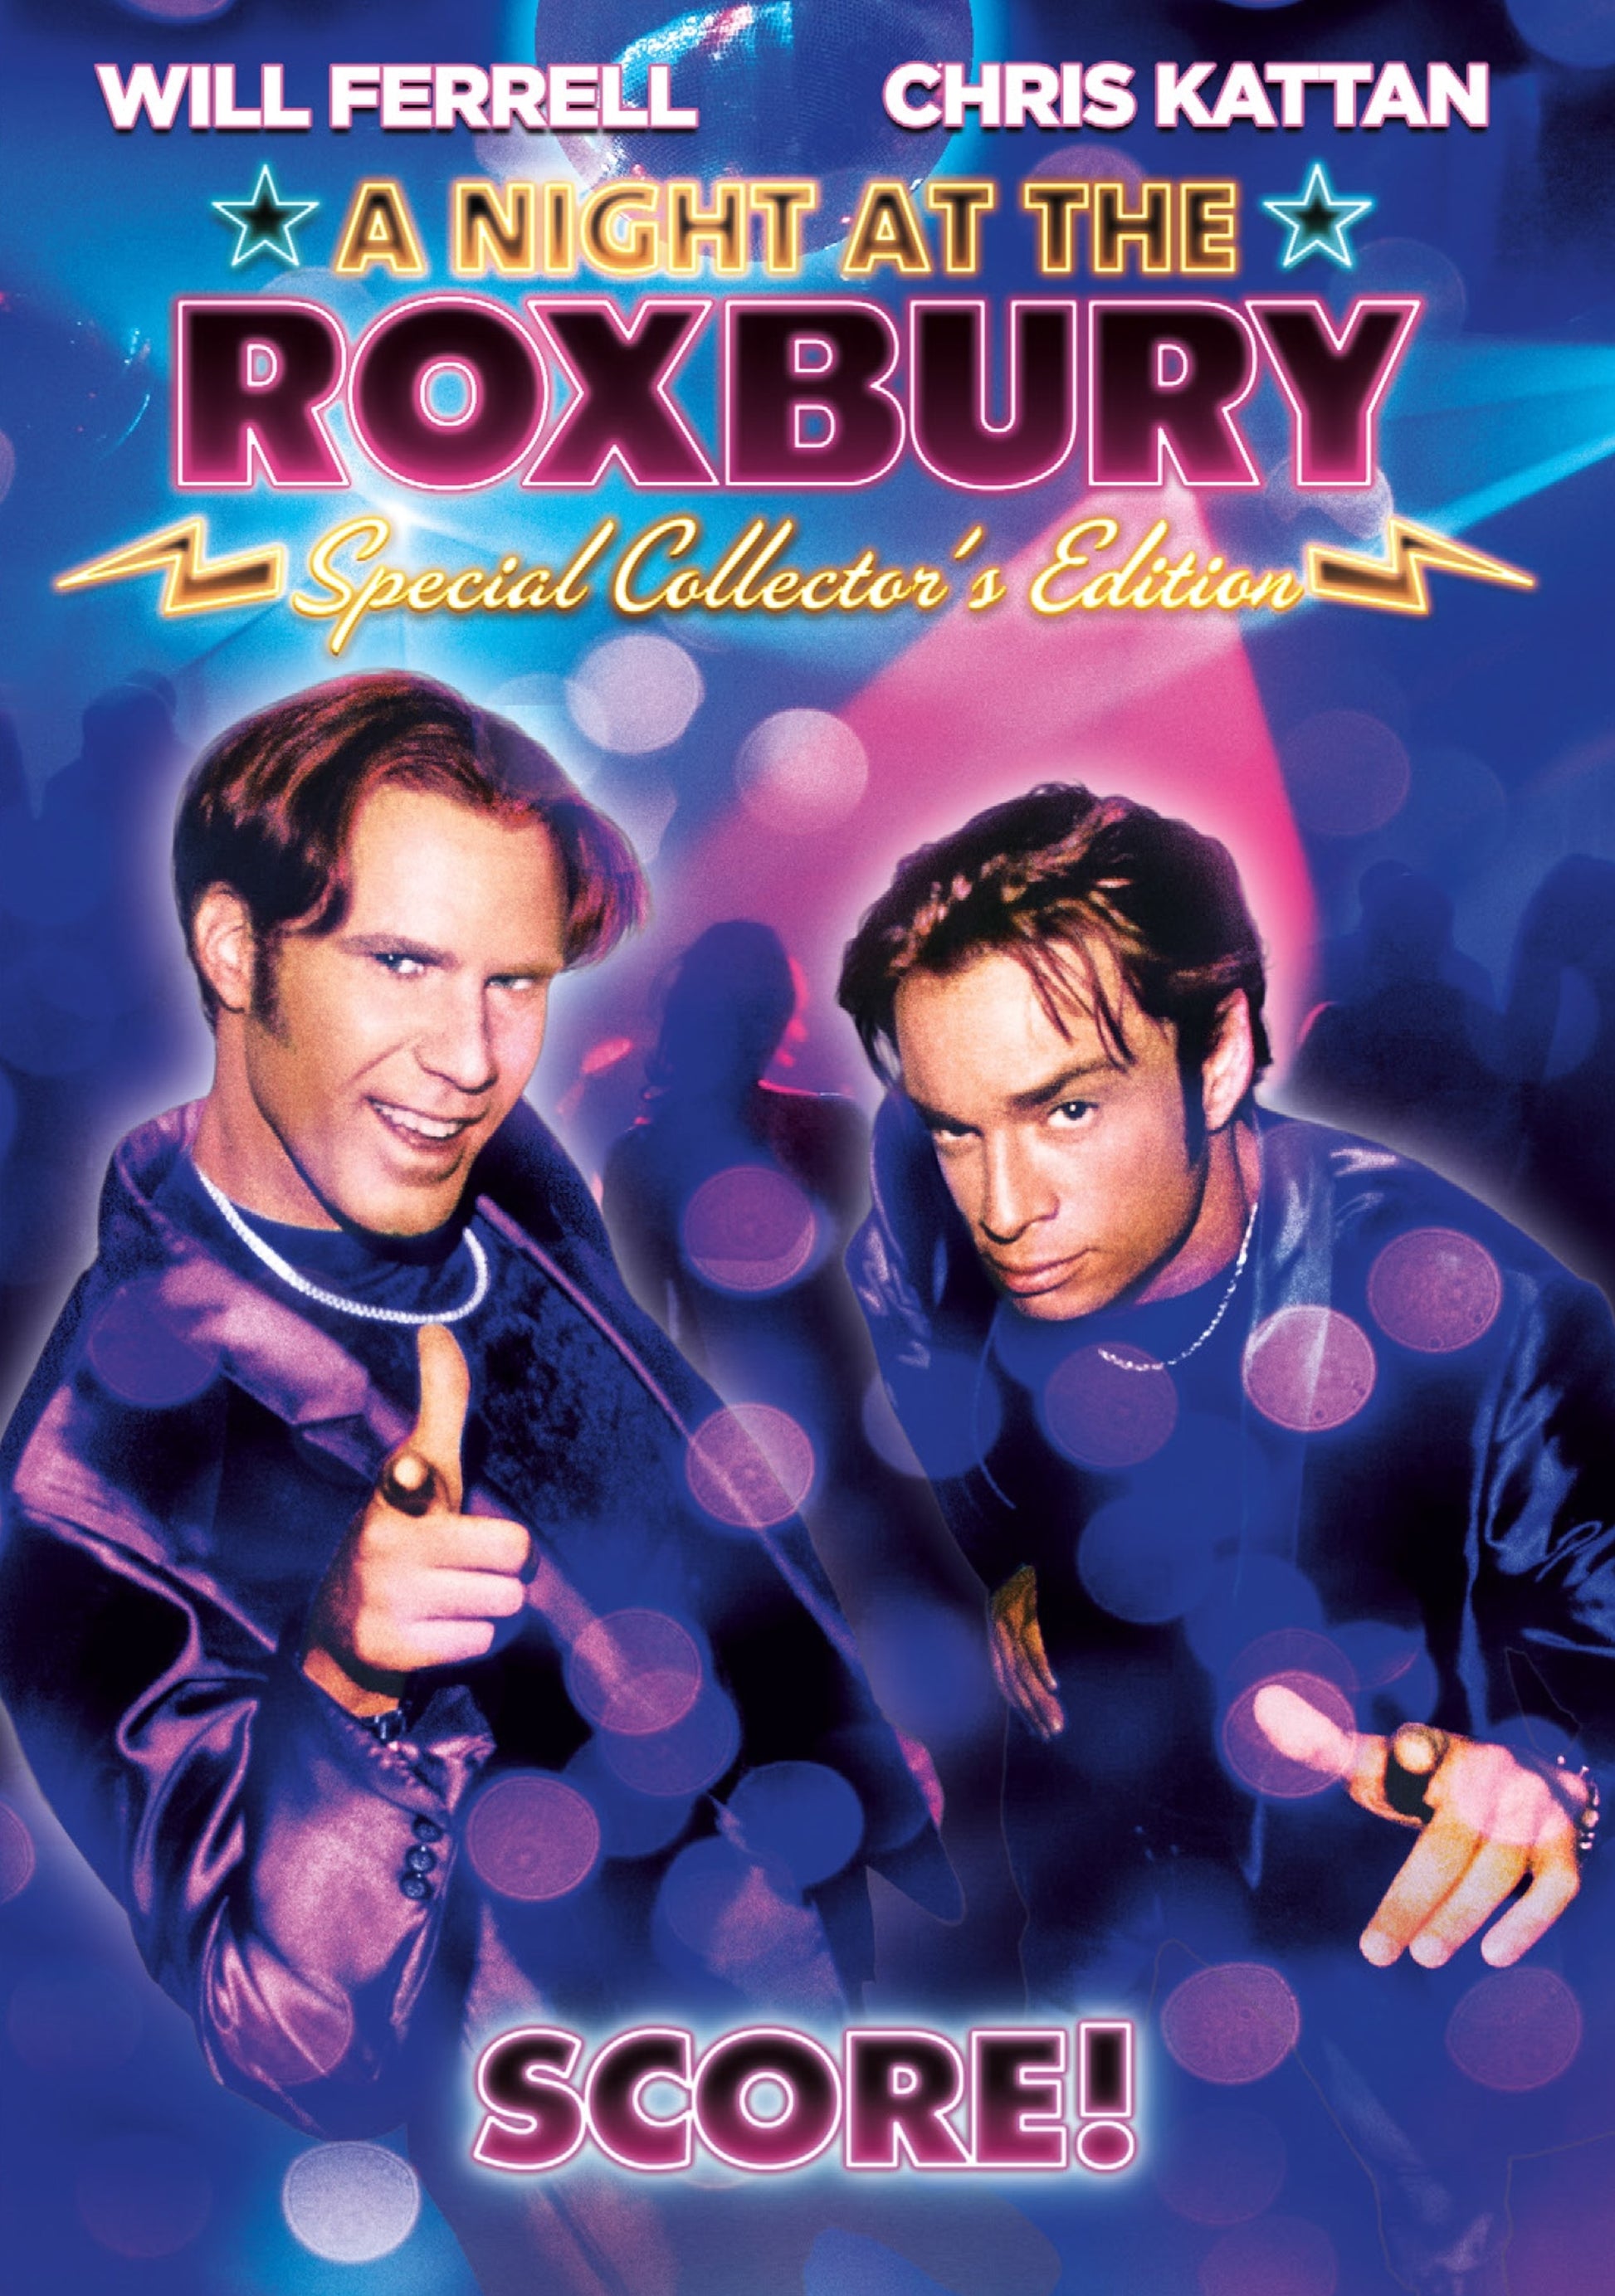 Night at the Roxbury cover art